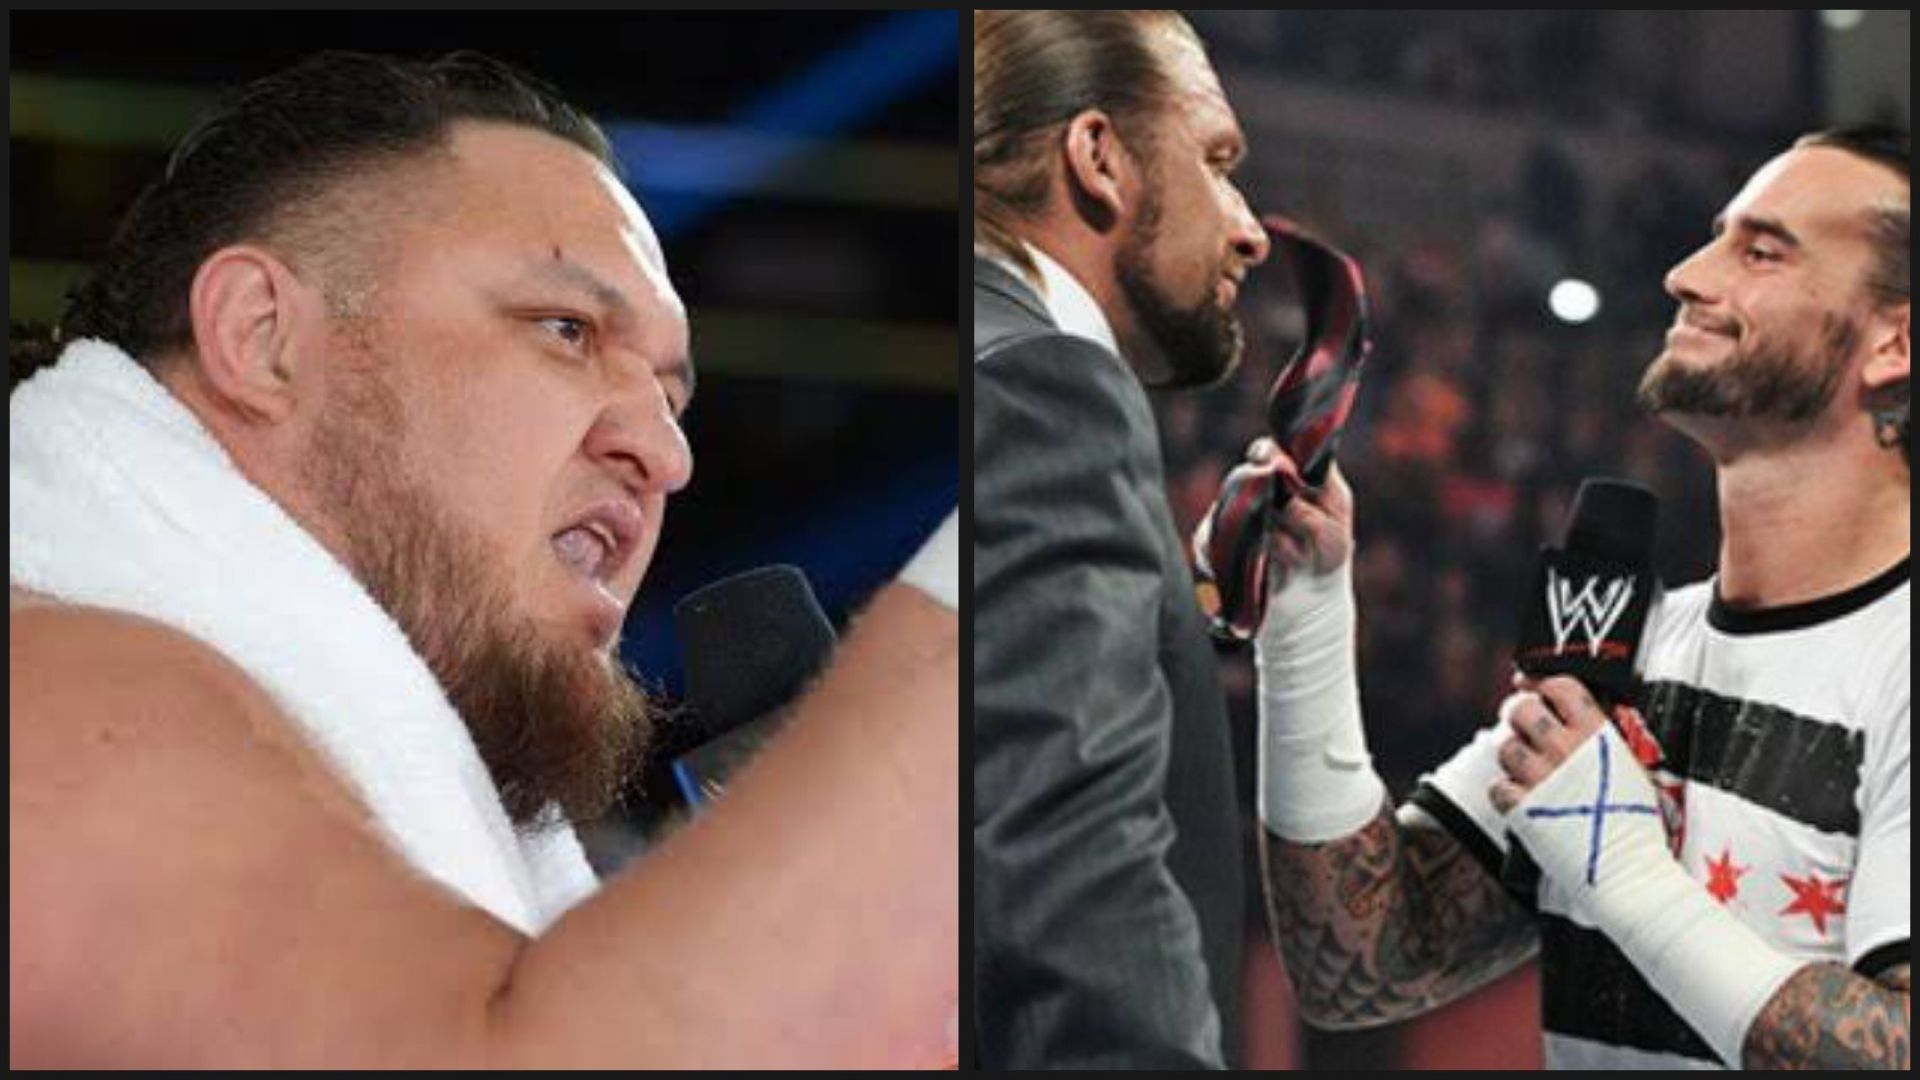 Samoa Joe (L) and CM Punk (R) didn